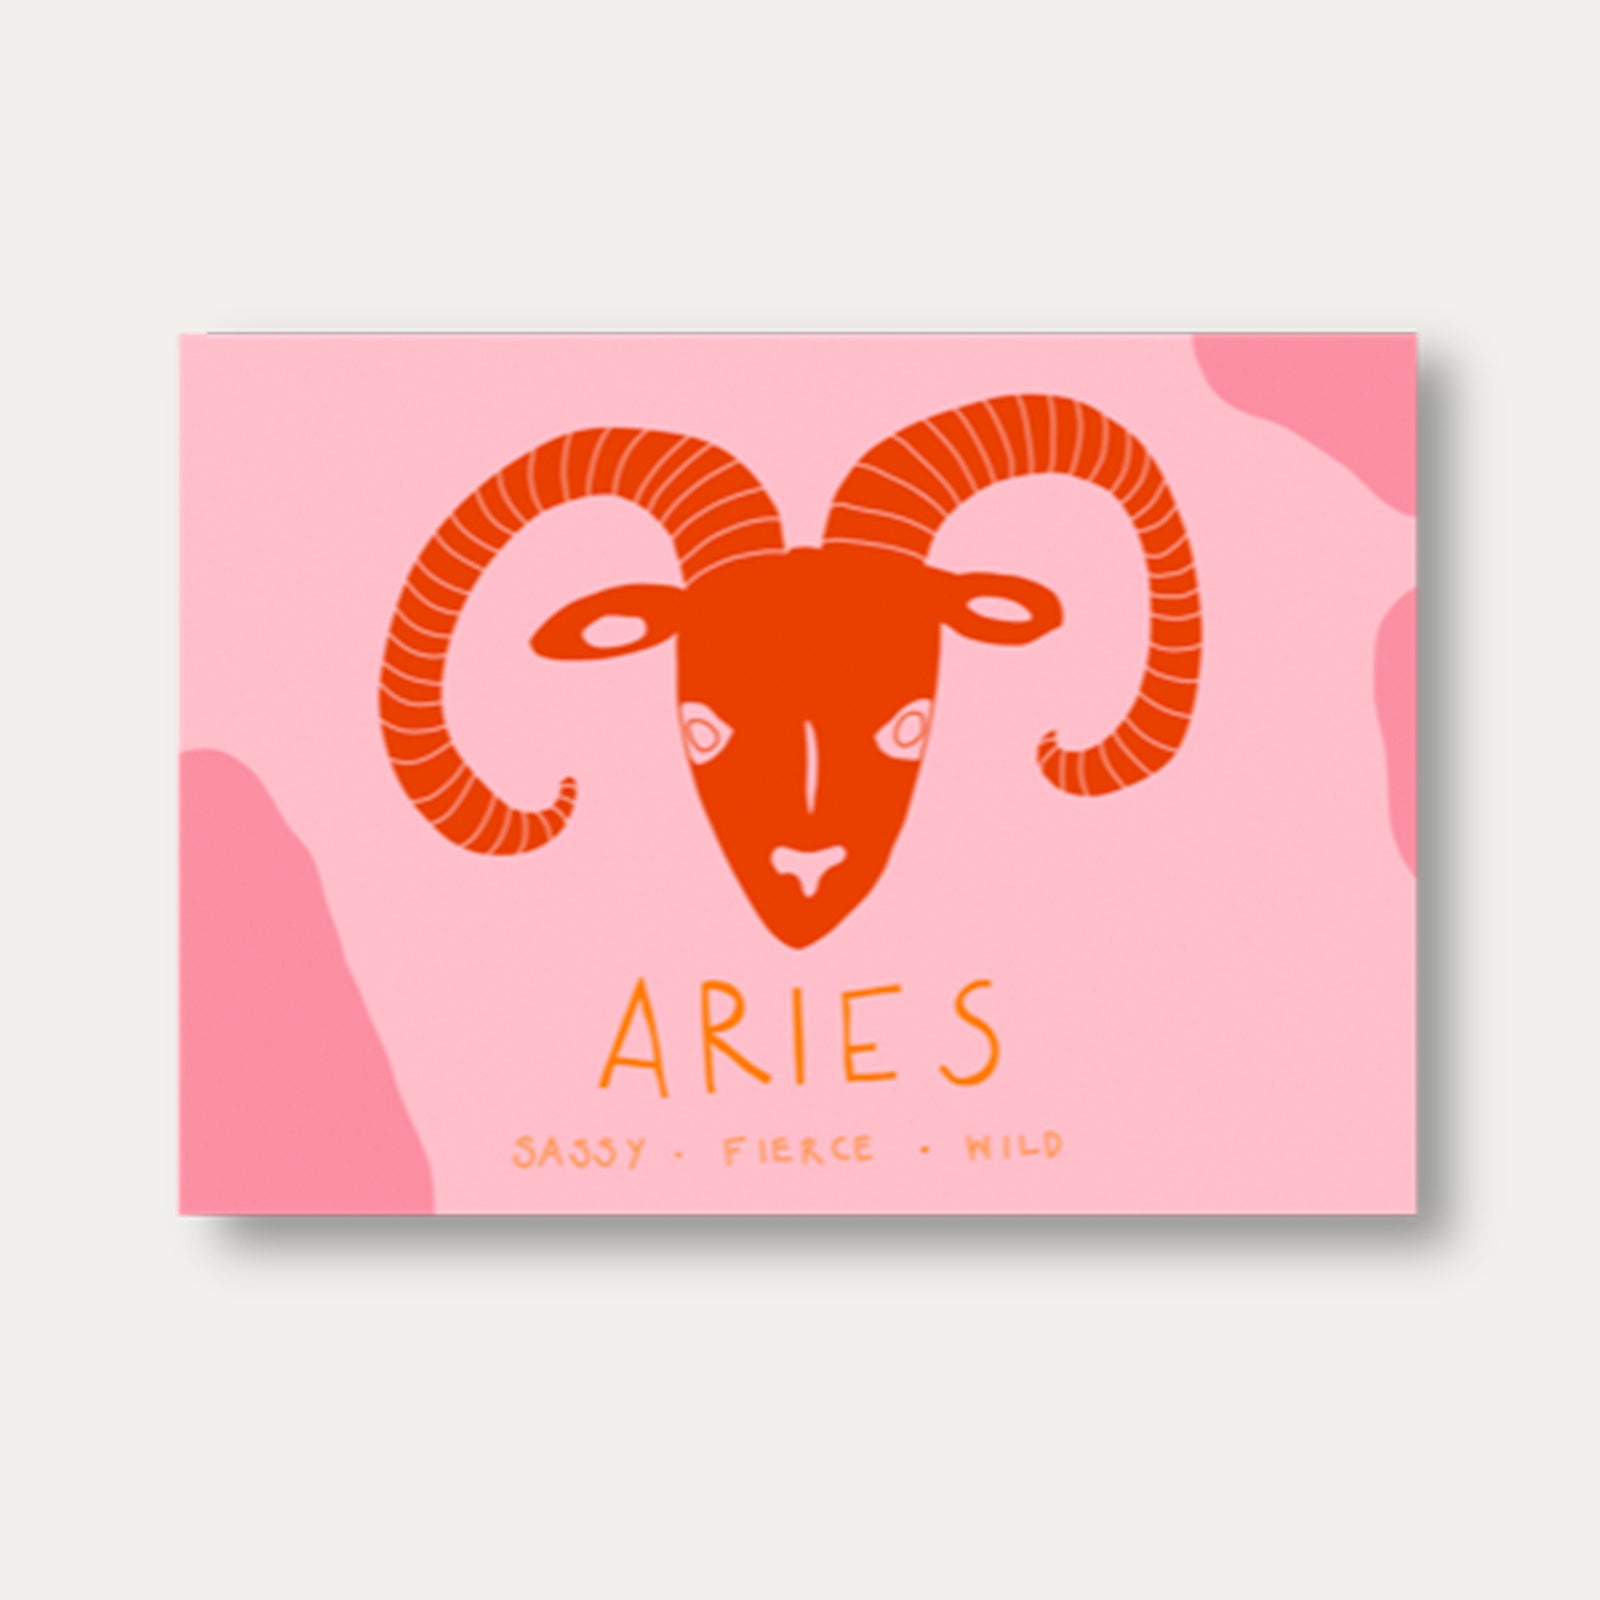 Aries – Postkarte